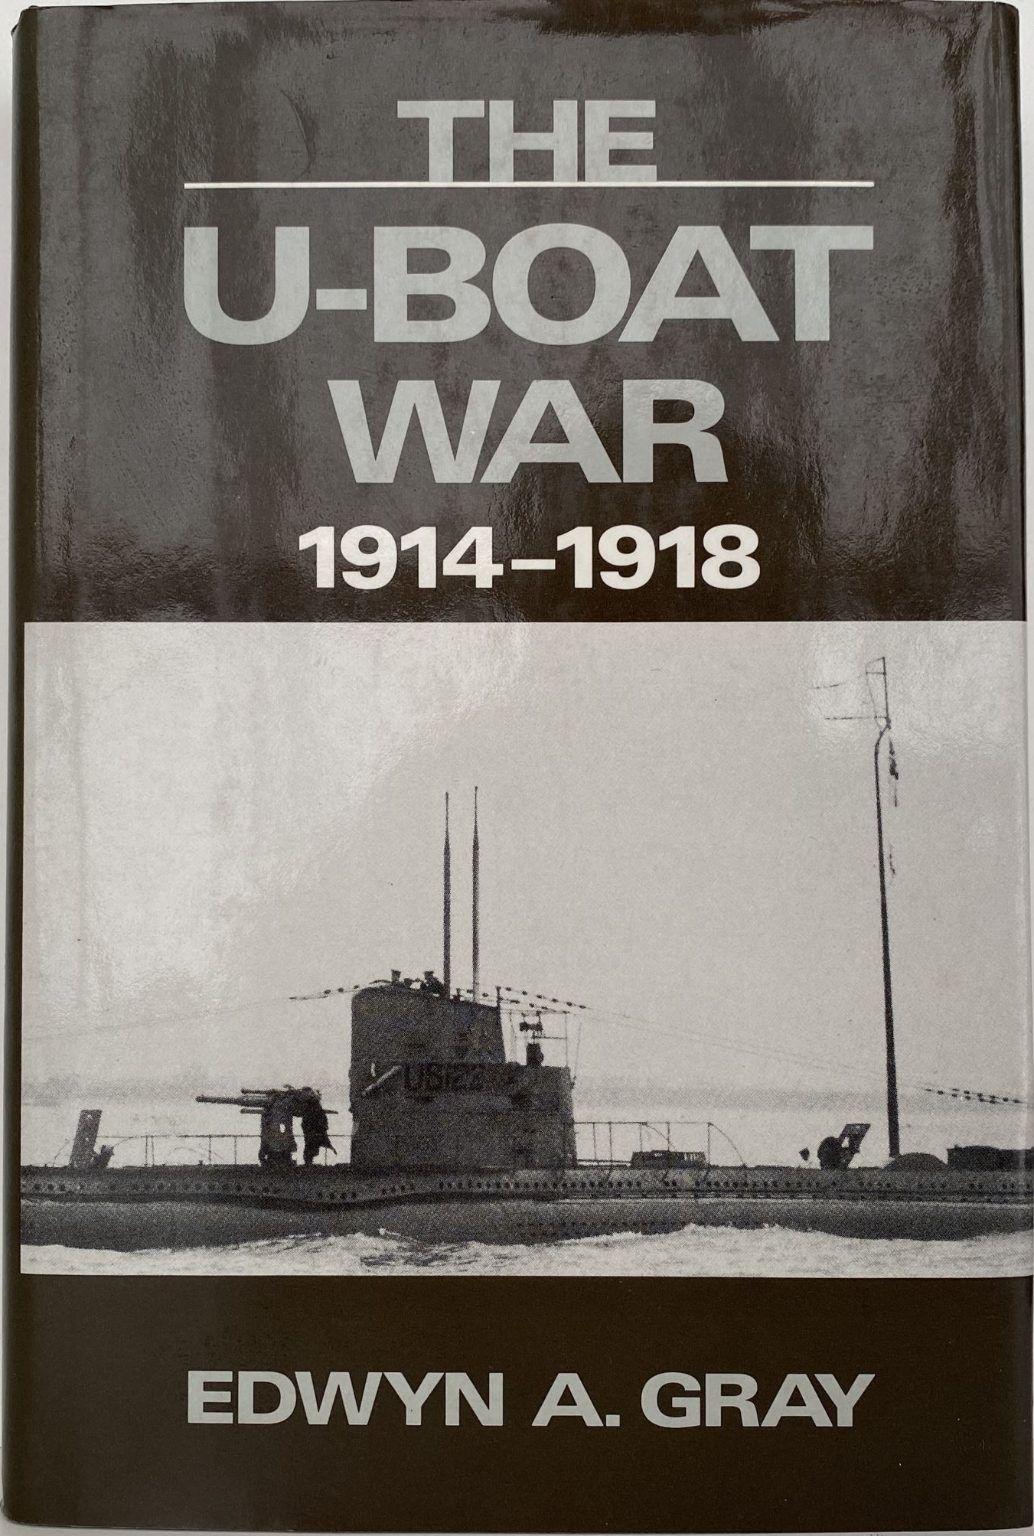 THE U-BOAT WAR, 1914-1918